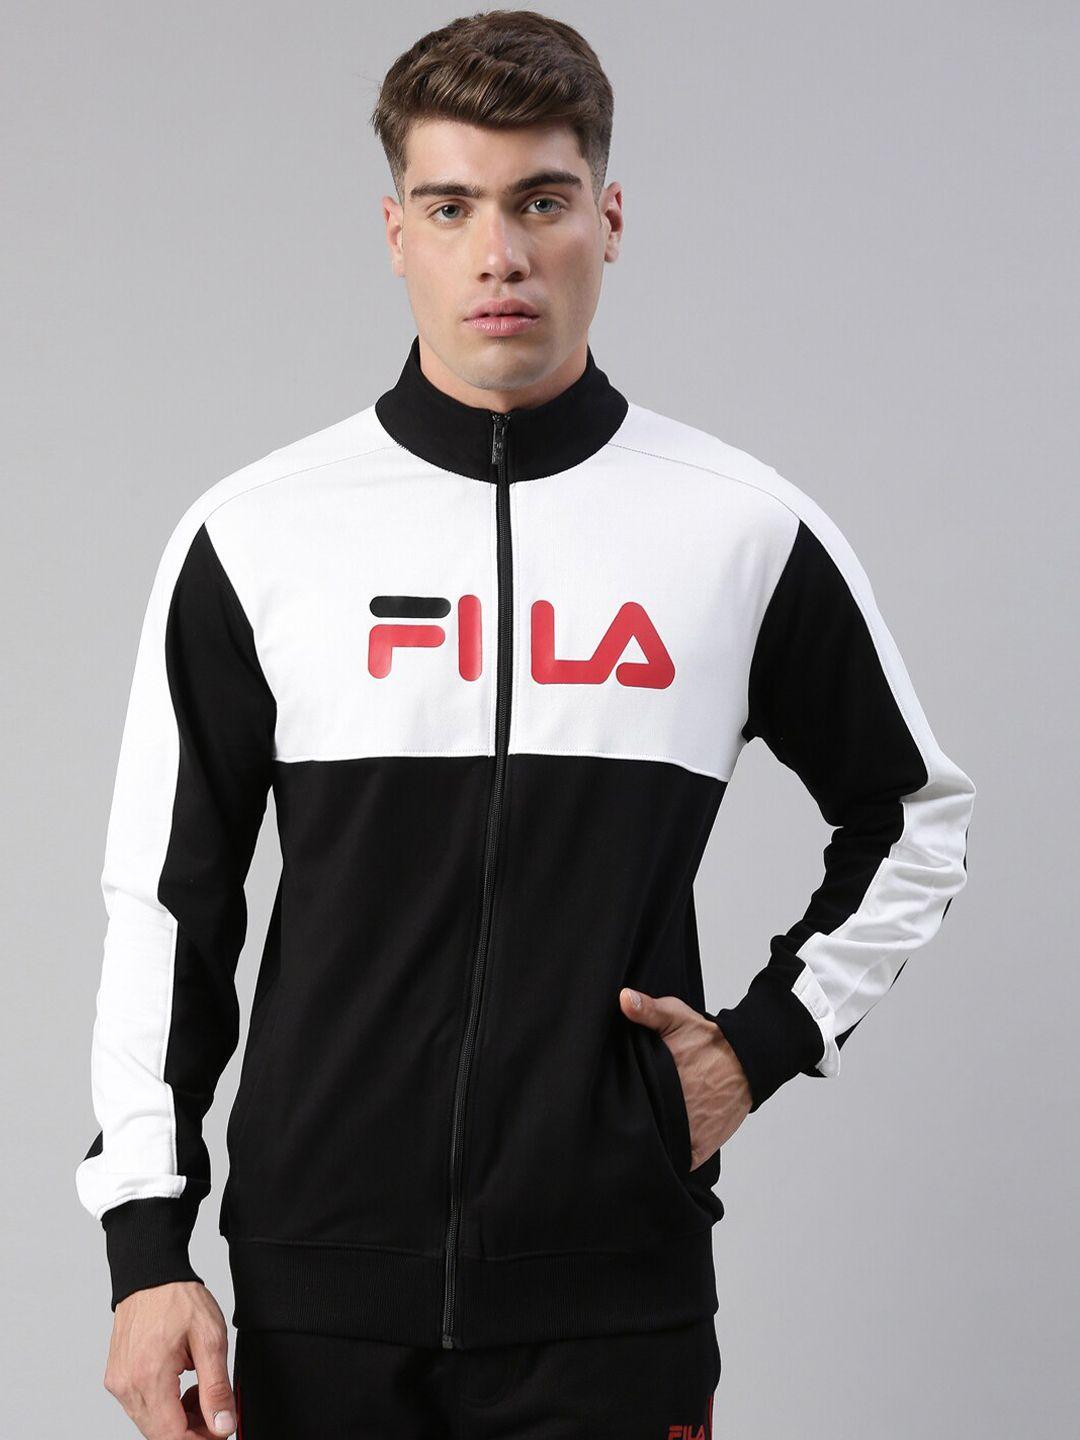 fila-men-black-white-colourblocked-junaid-jkt-sporty-jacket